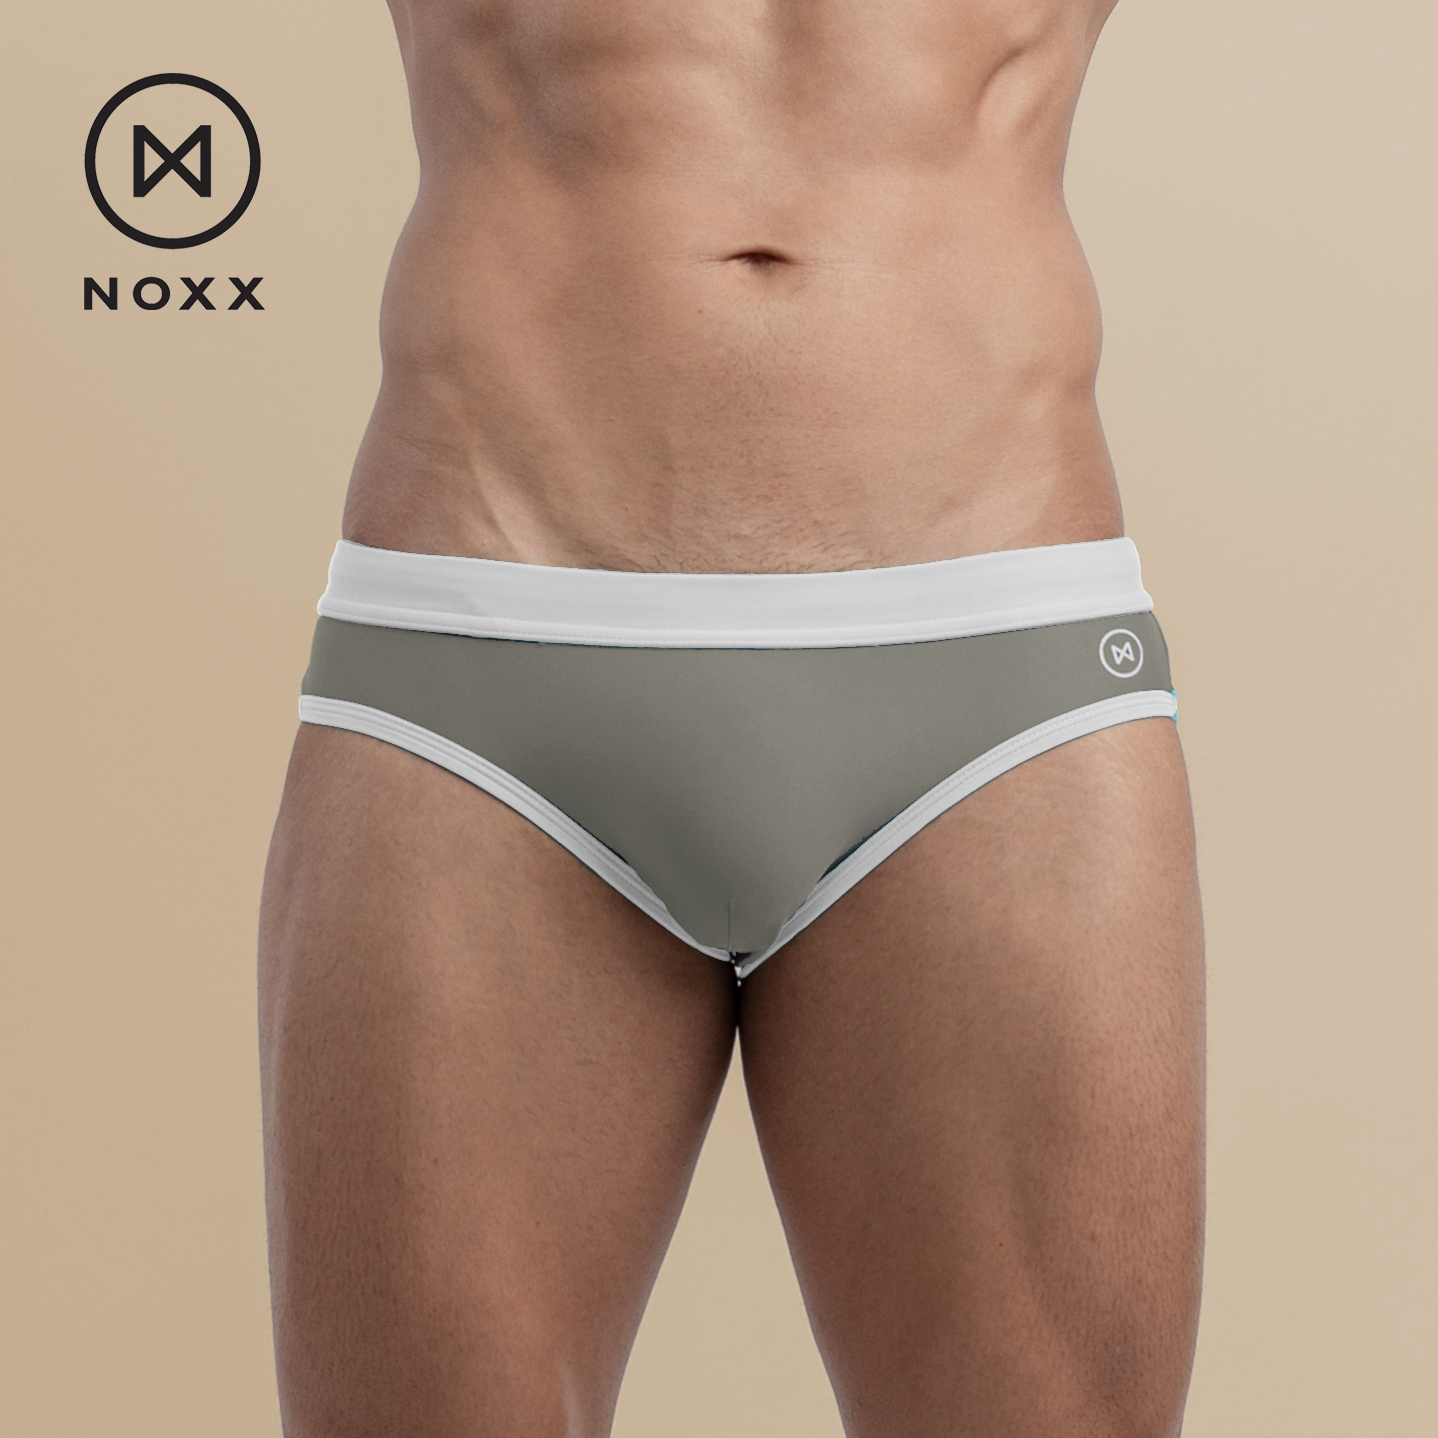 Noxx Swim Briefs: กางเกงว่ายน้ำบรีฟ สีเทาอ่อนขอบขาว